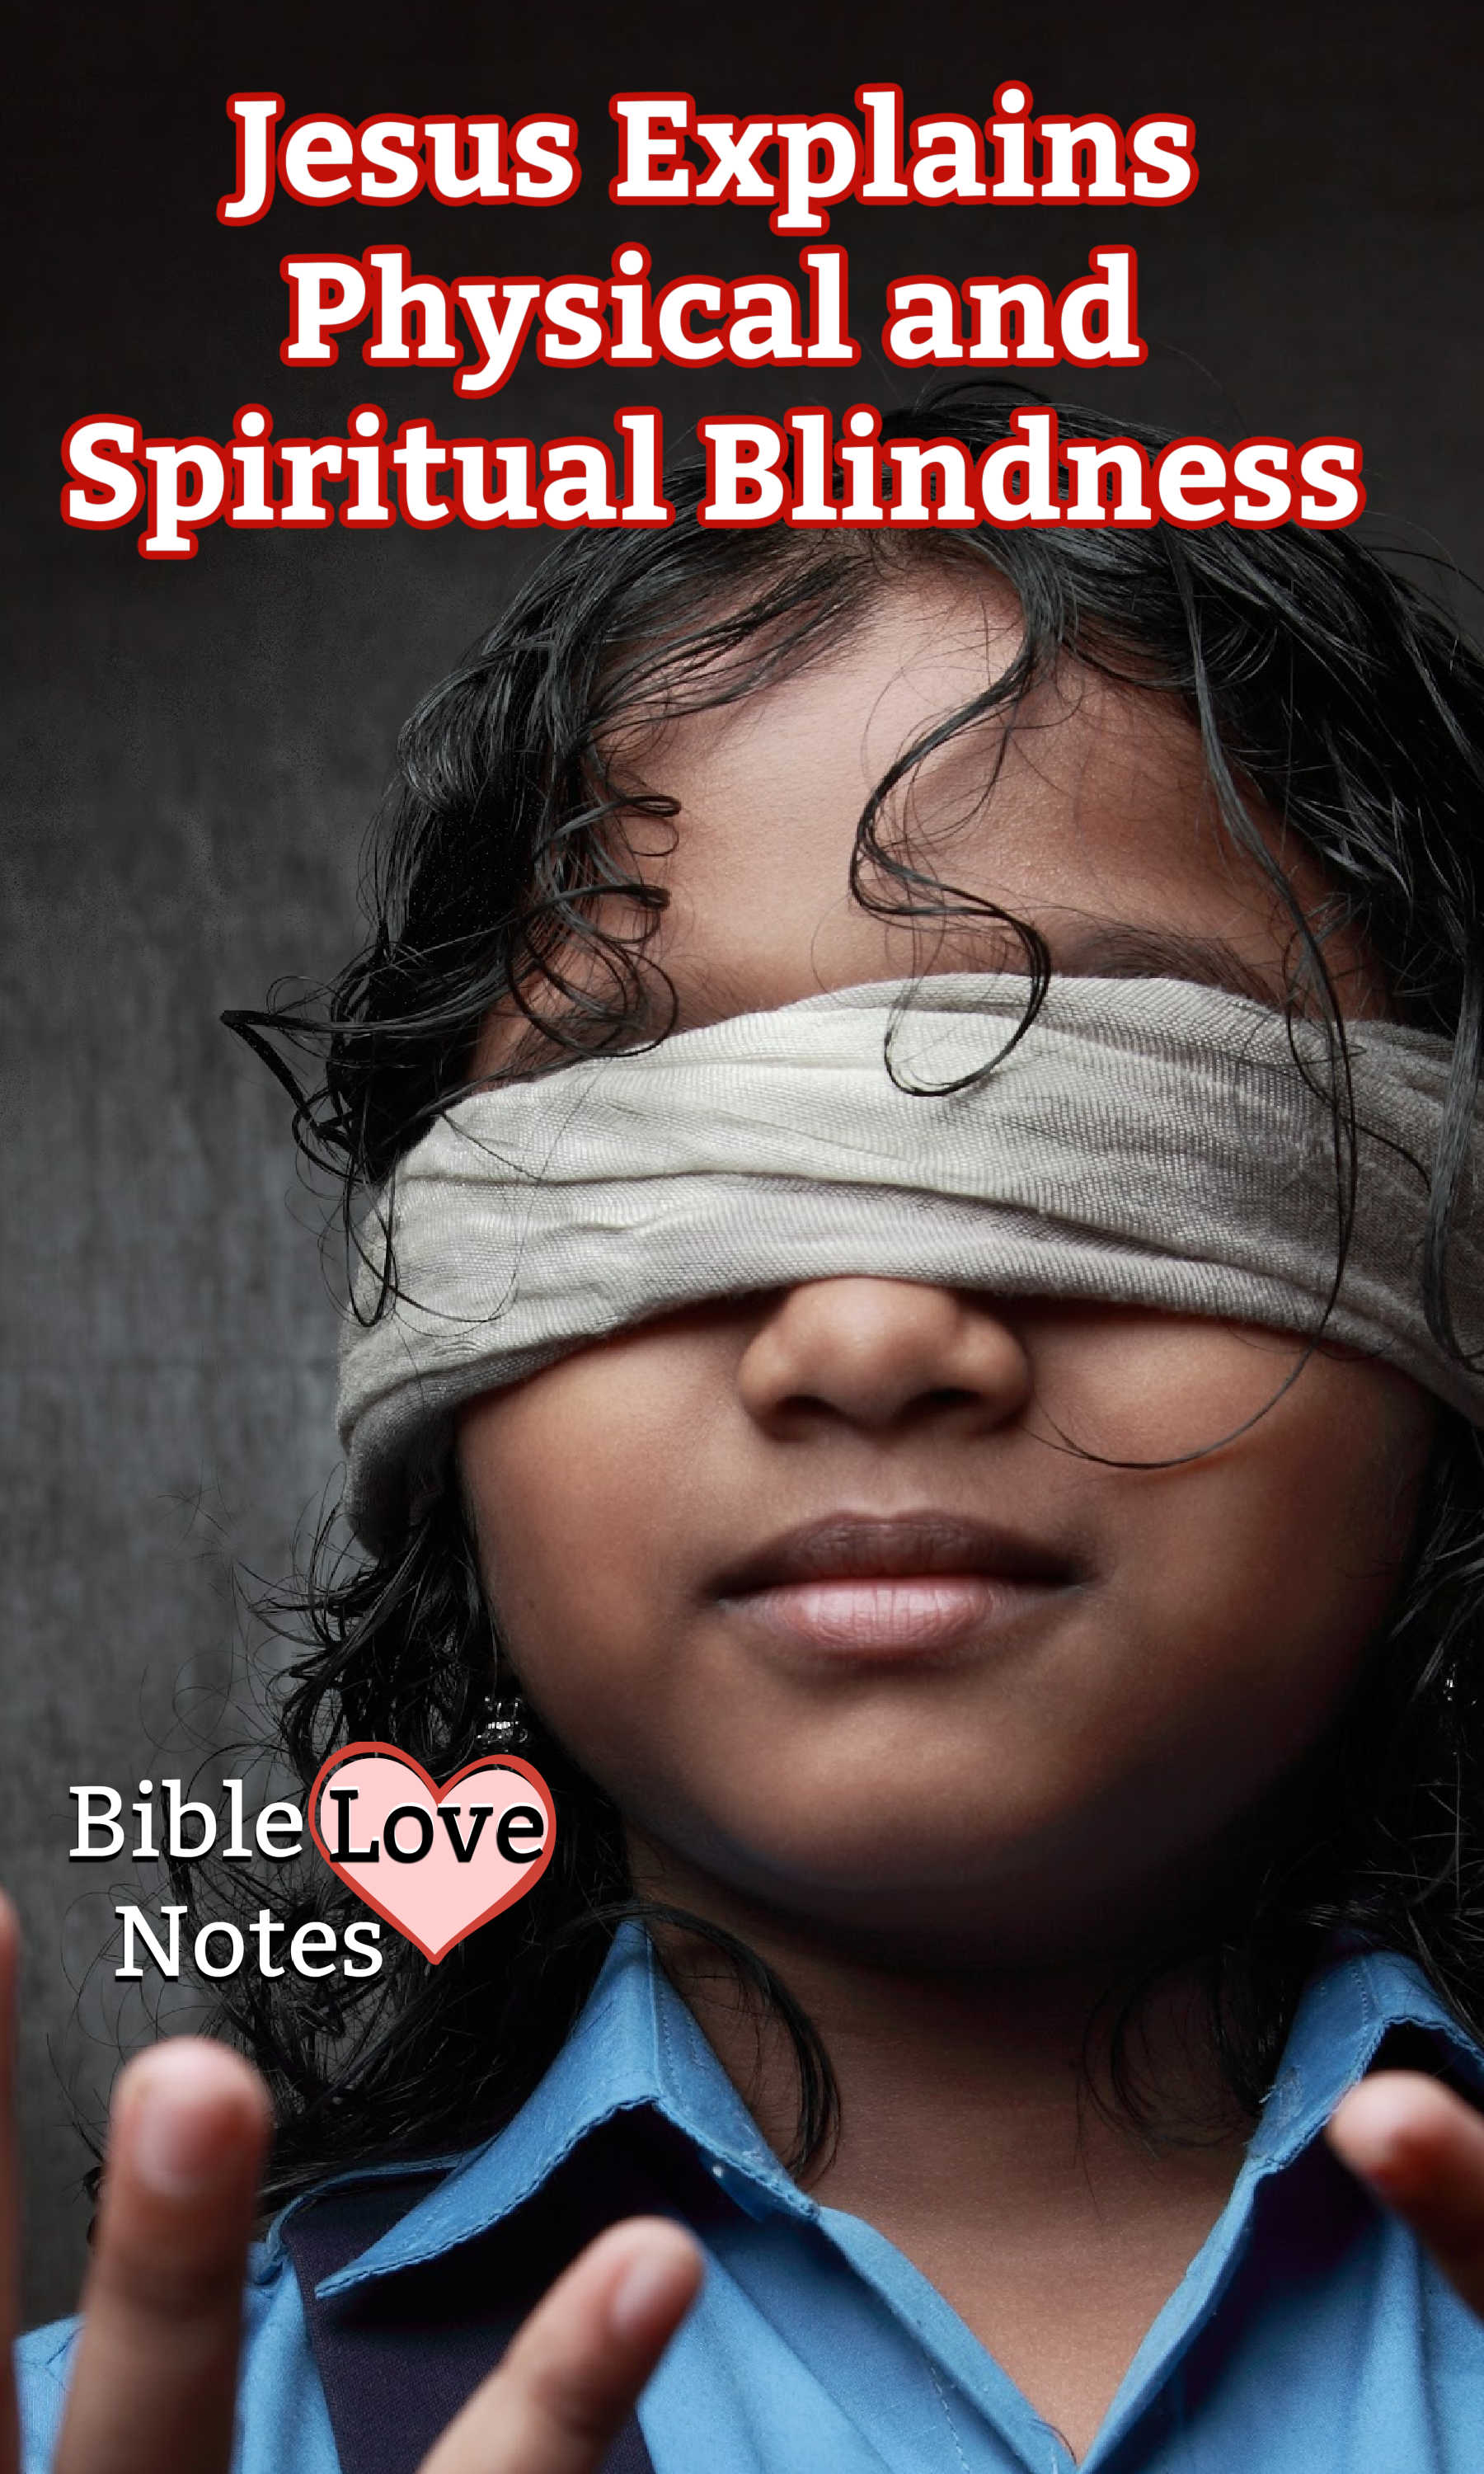 Bible Love Notes Physical Blindness Versus Spiritual Blindness